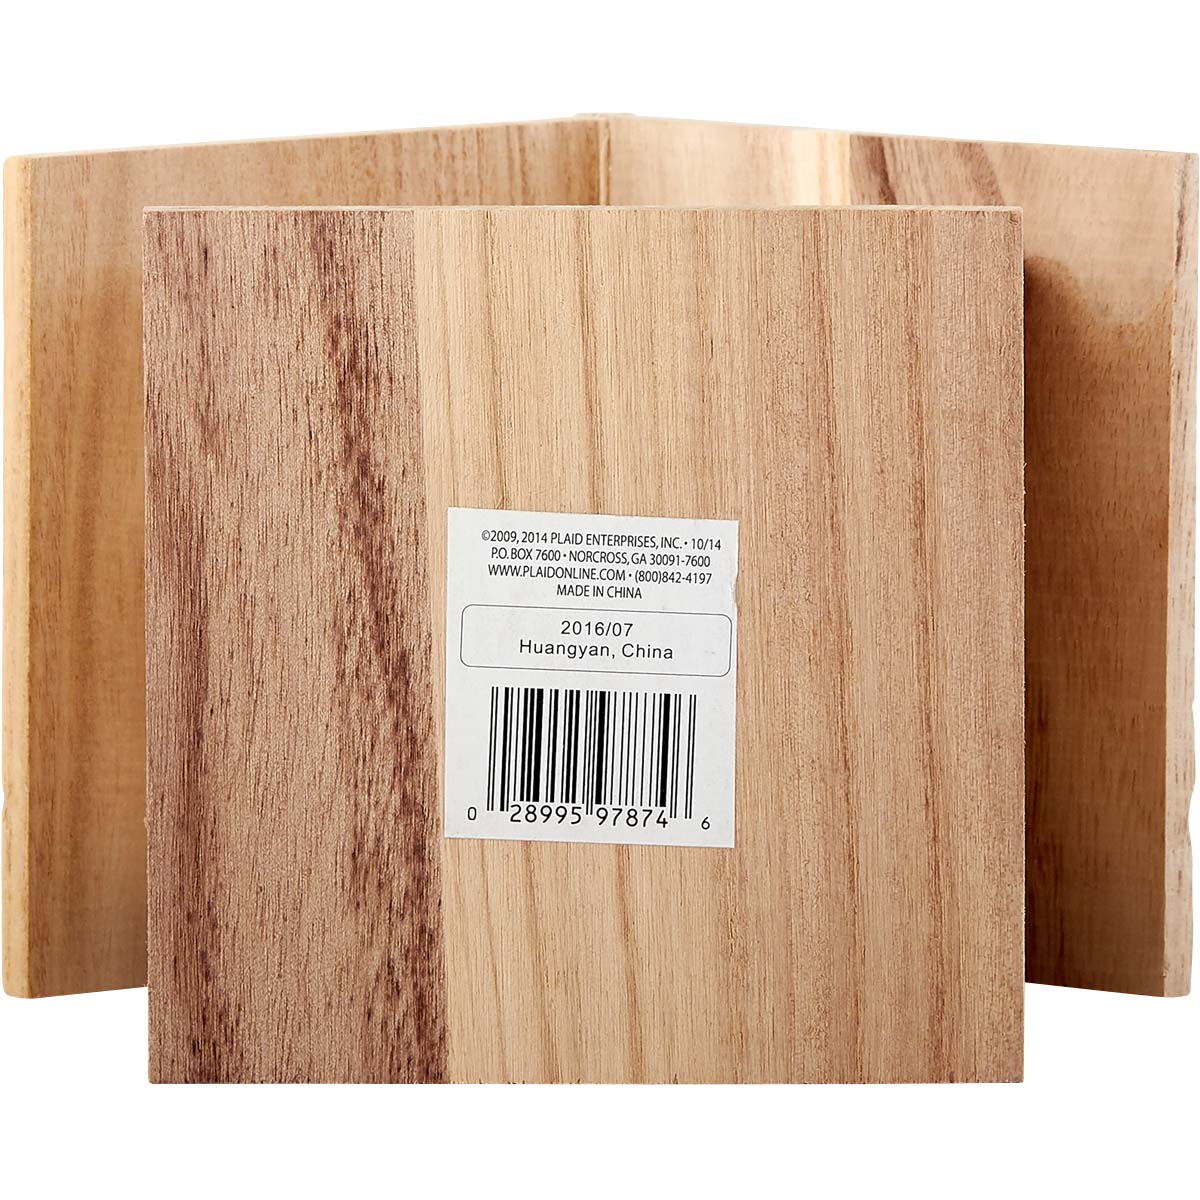 Plaid ® Wood Surfaces - Birdhouses - Large - 97874